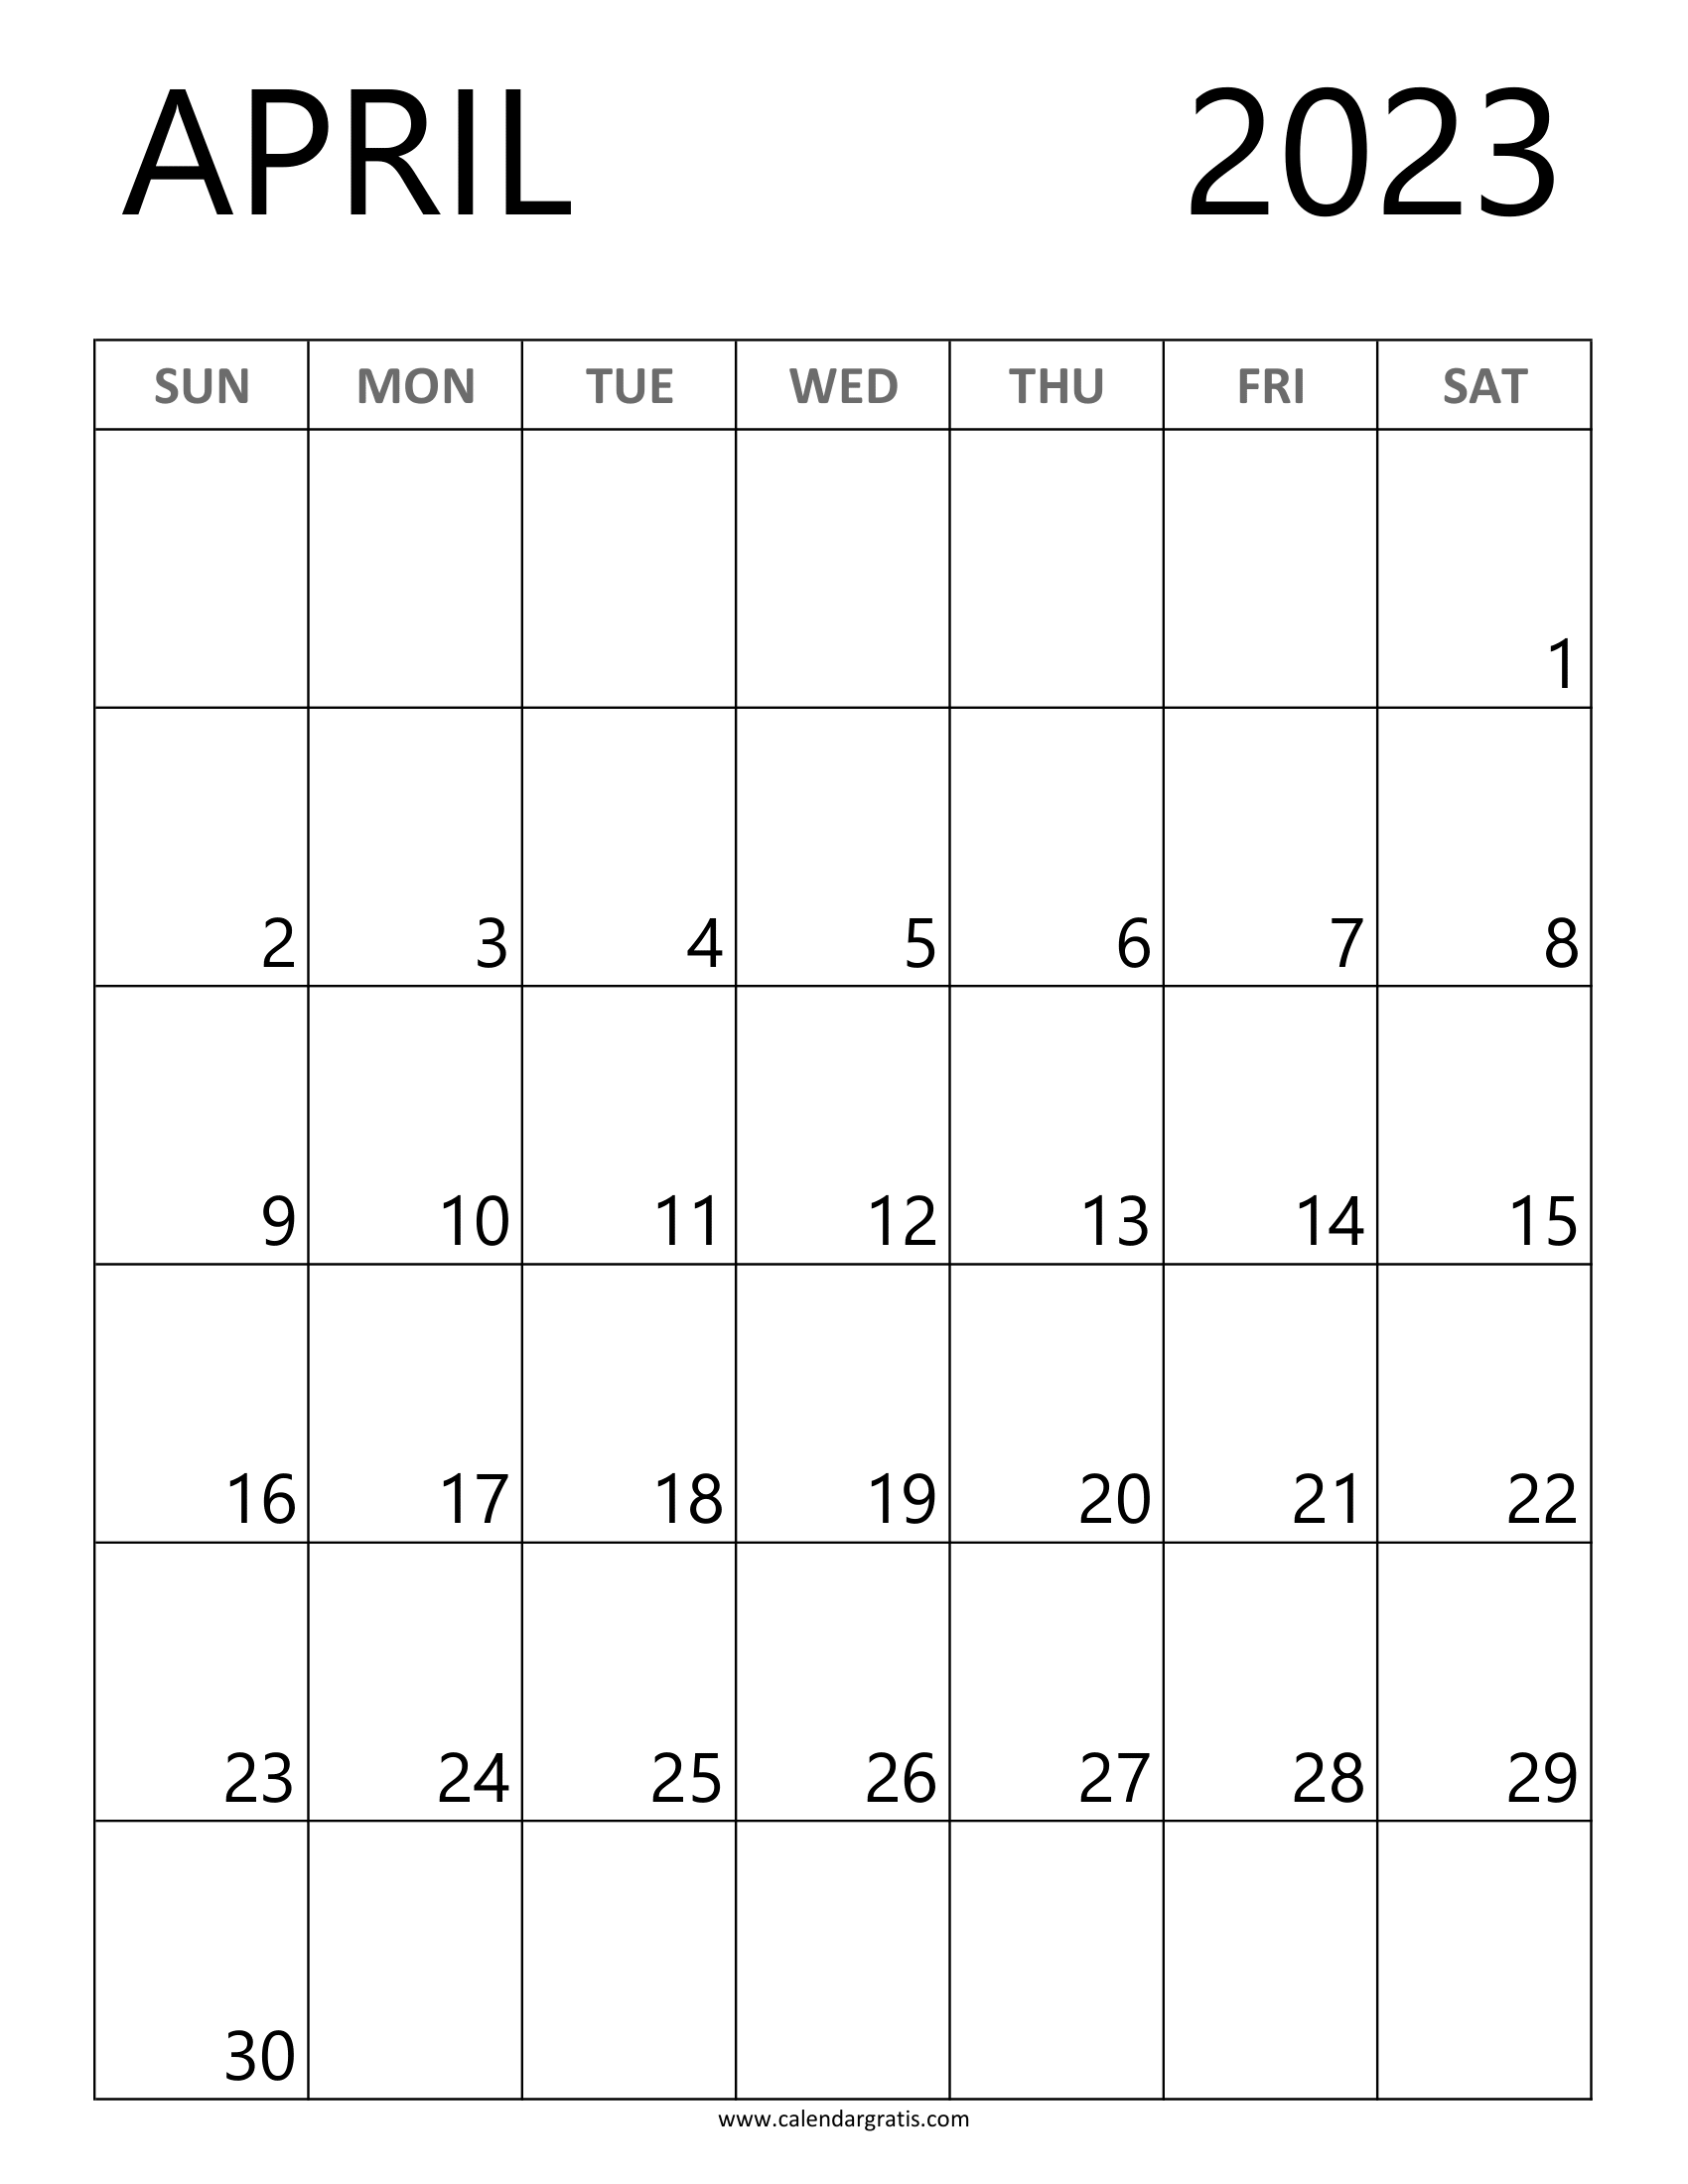 Printable Free April 2023 Calendar A4 Size Template. Downloadable April Month Calendar in Vertical Layout.